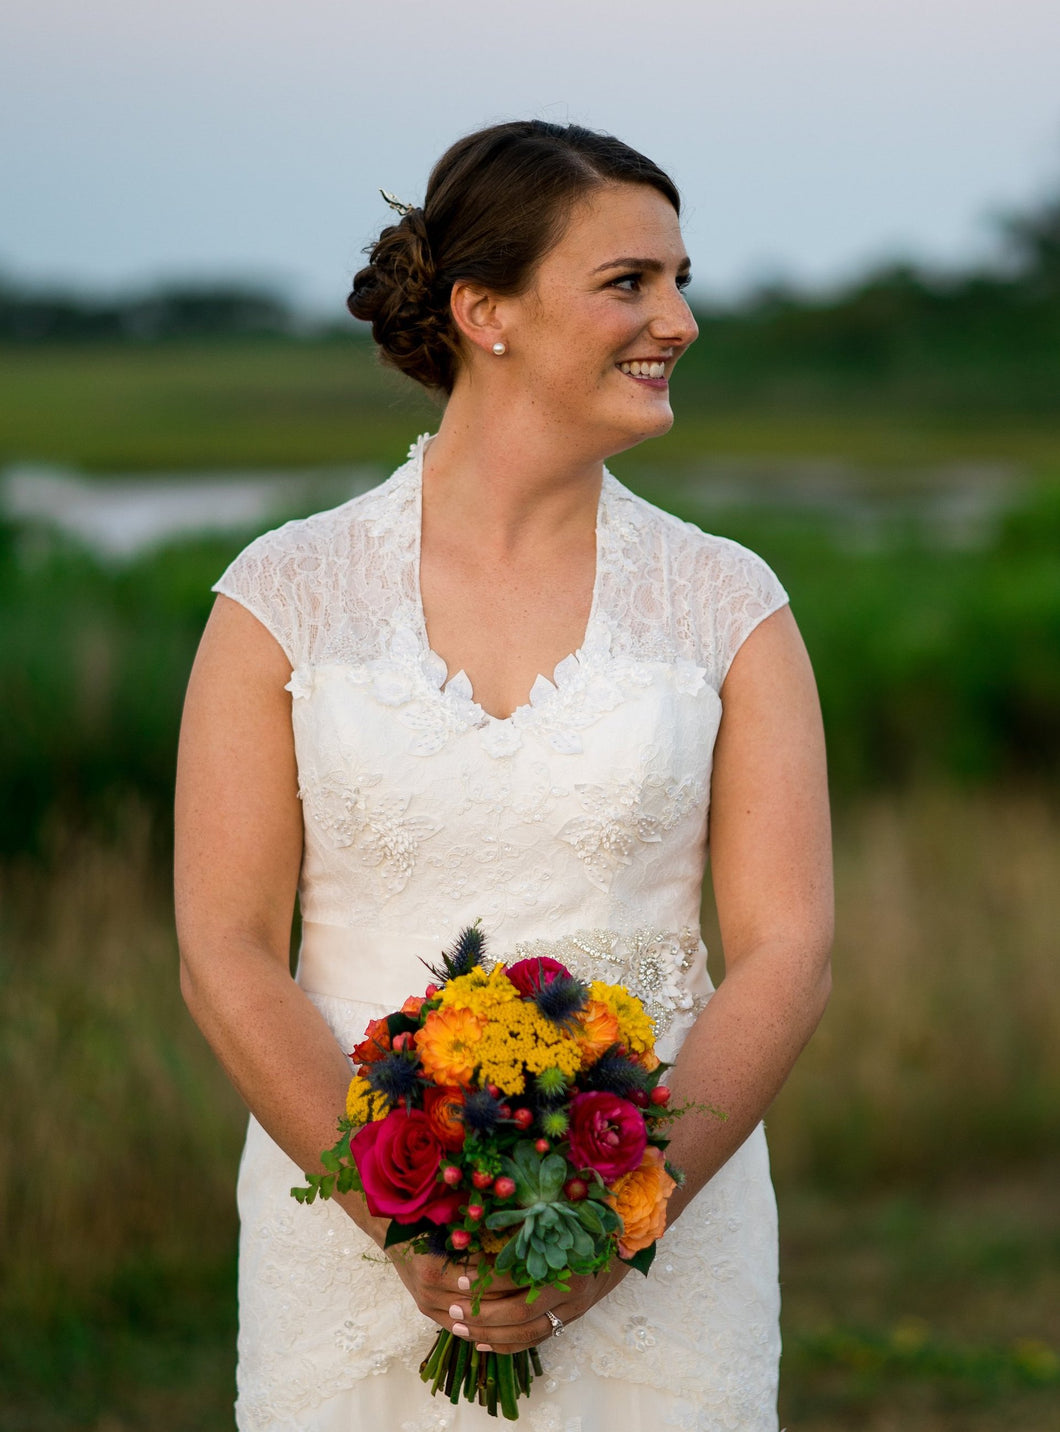 Melissa Sweet 'Cap Sleeve Trumpet' size 8 sample wedding dress front view on bride